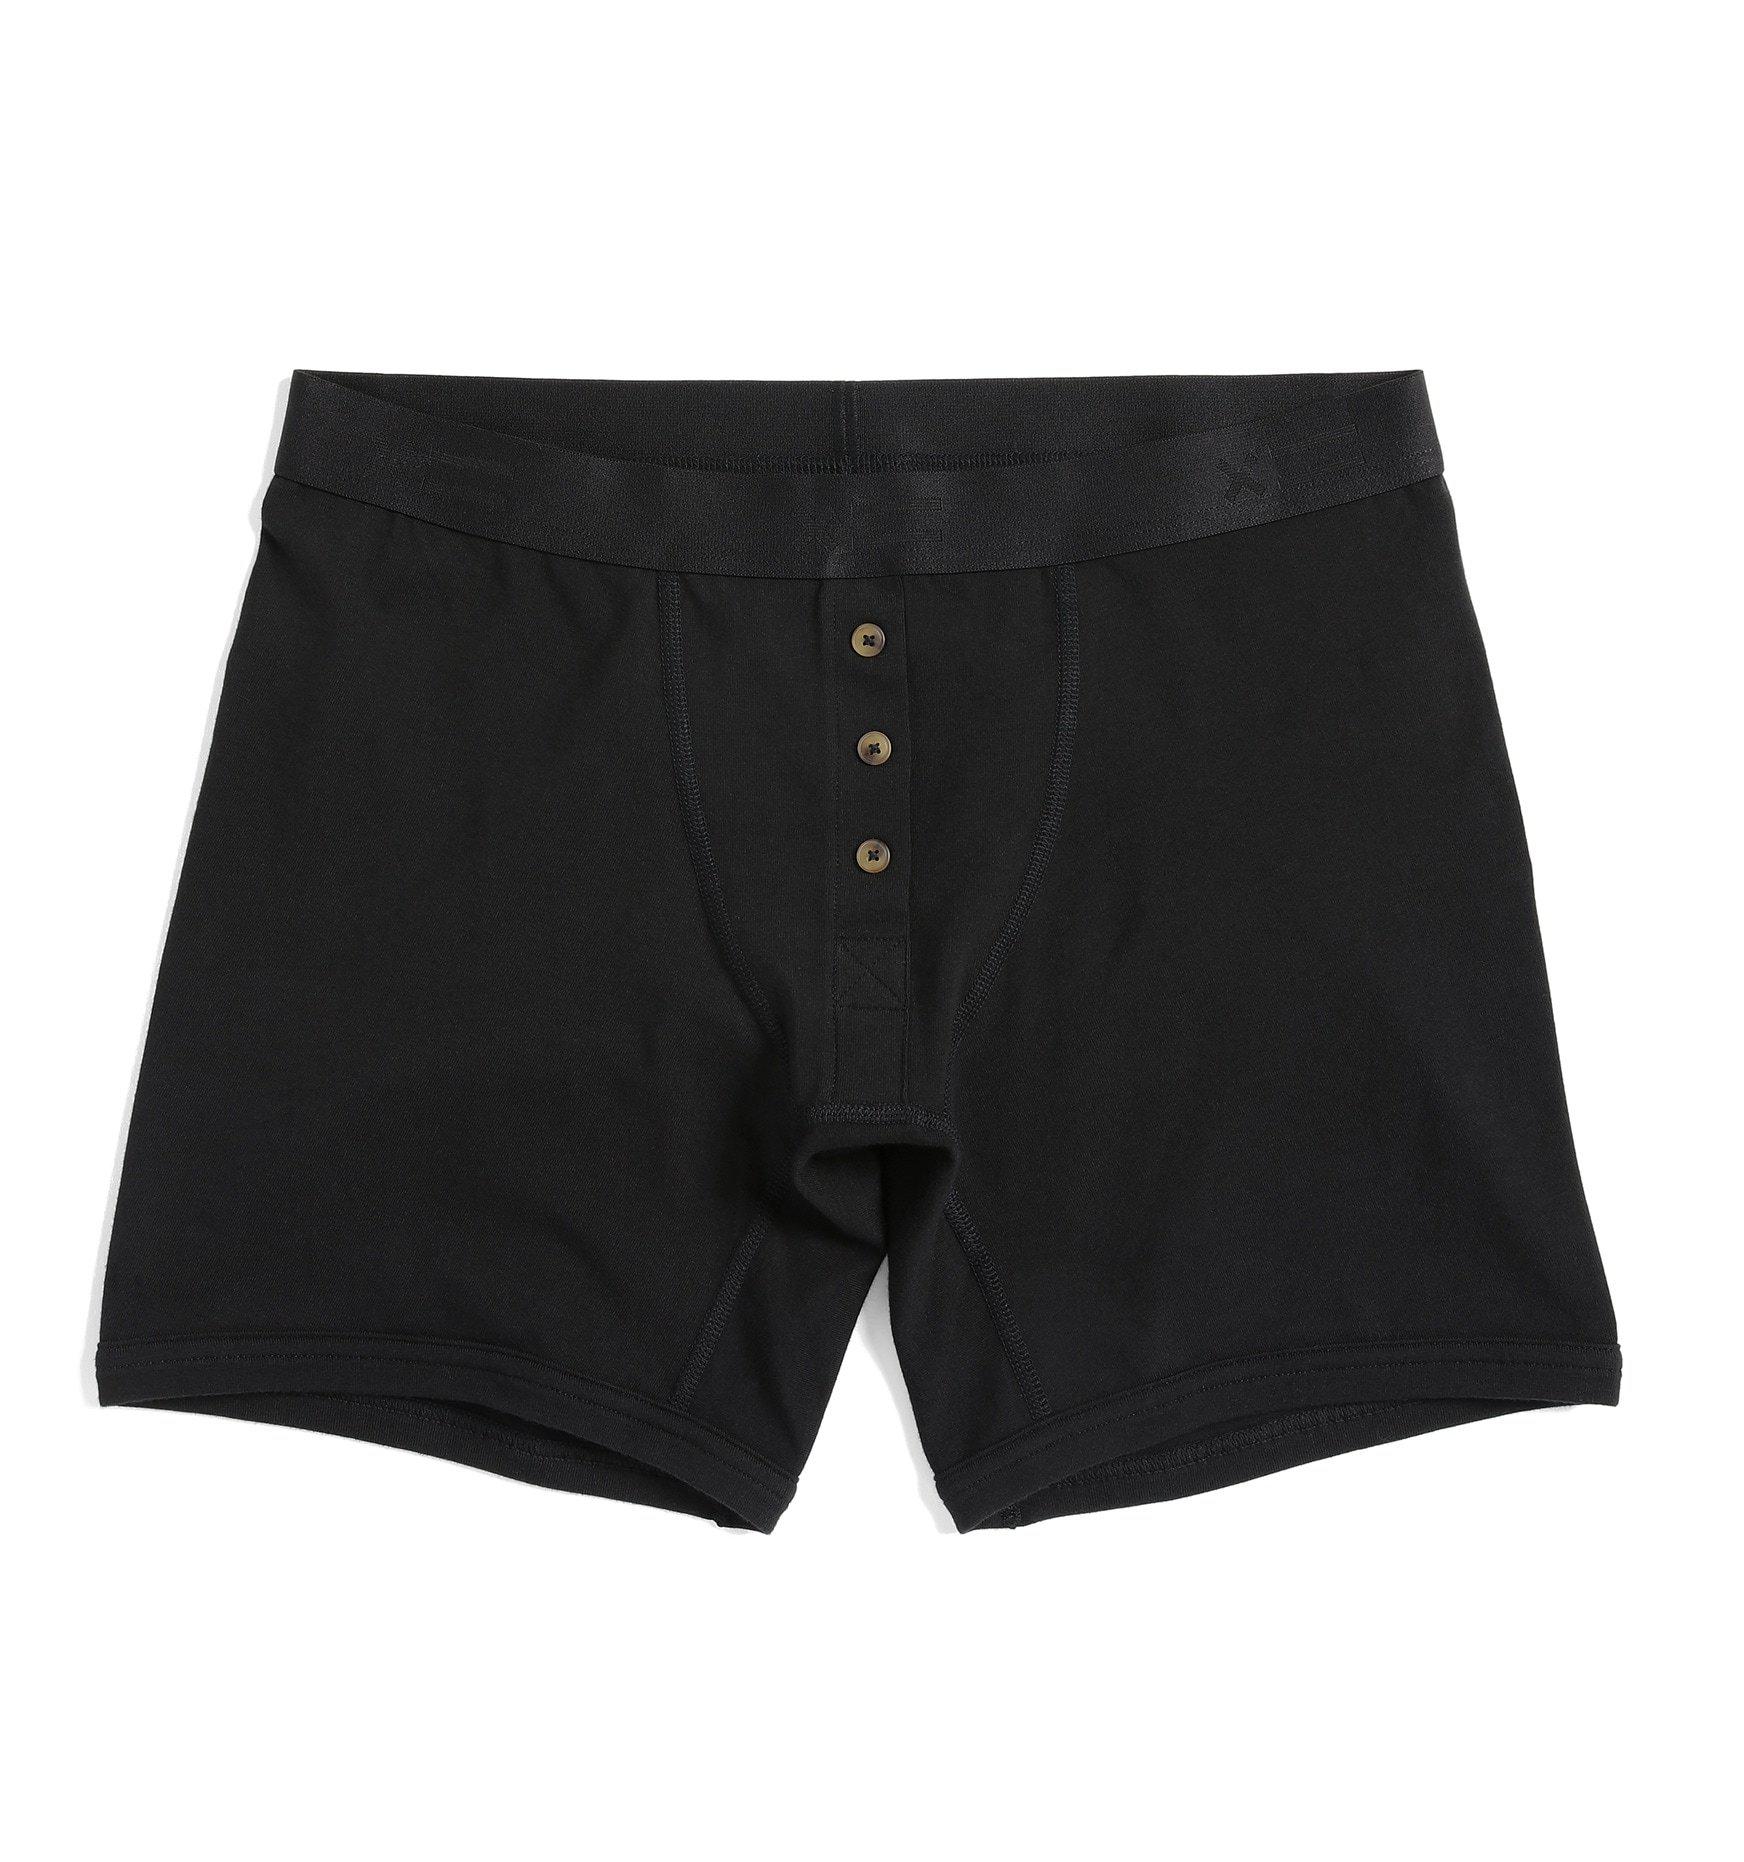 6" Fly - X= Black-Underwear-TomboyX